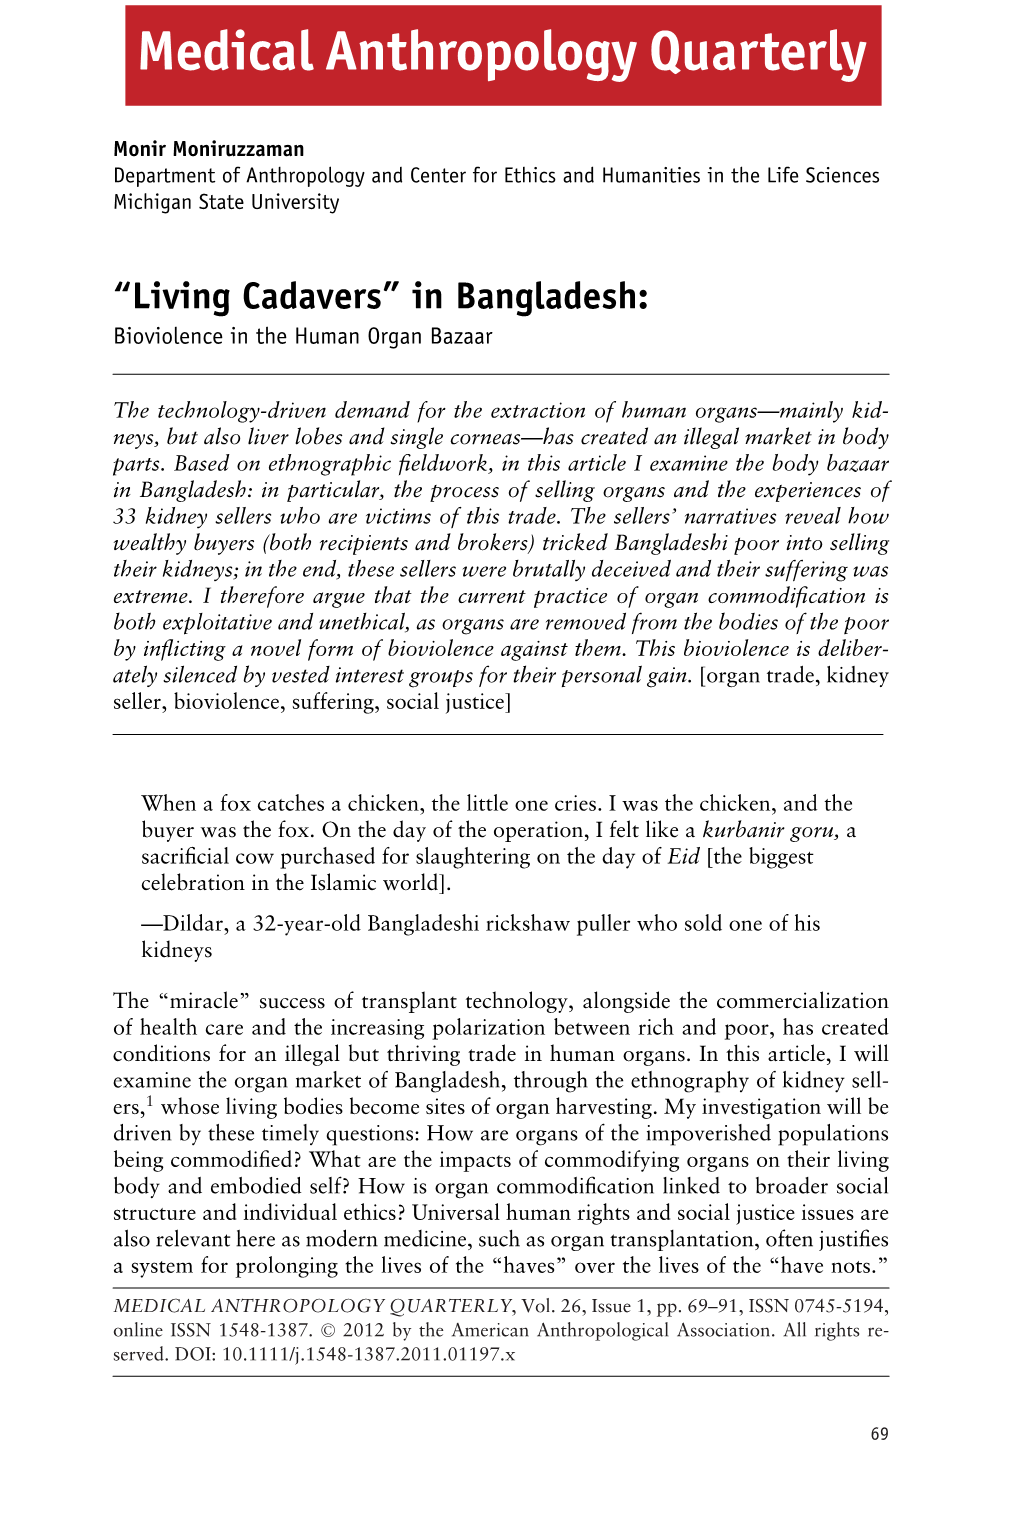 Living Cadavers in Bangladesh: Bioviolence in the Human Organ